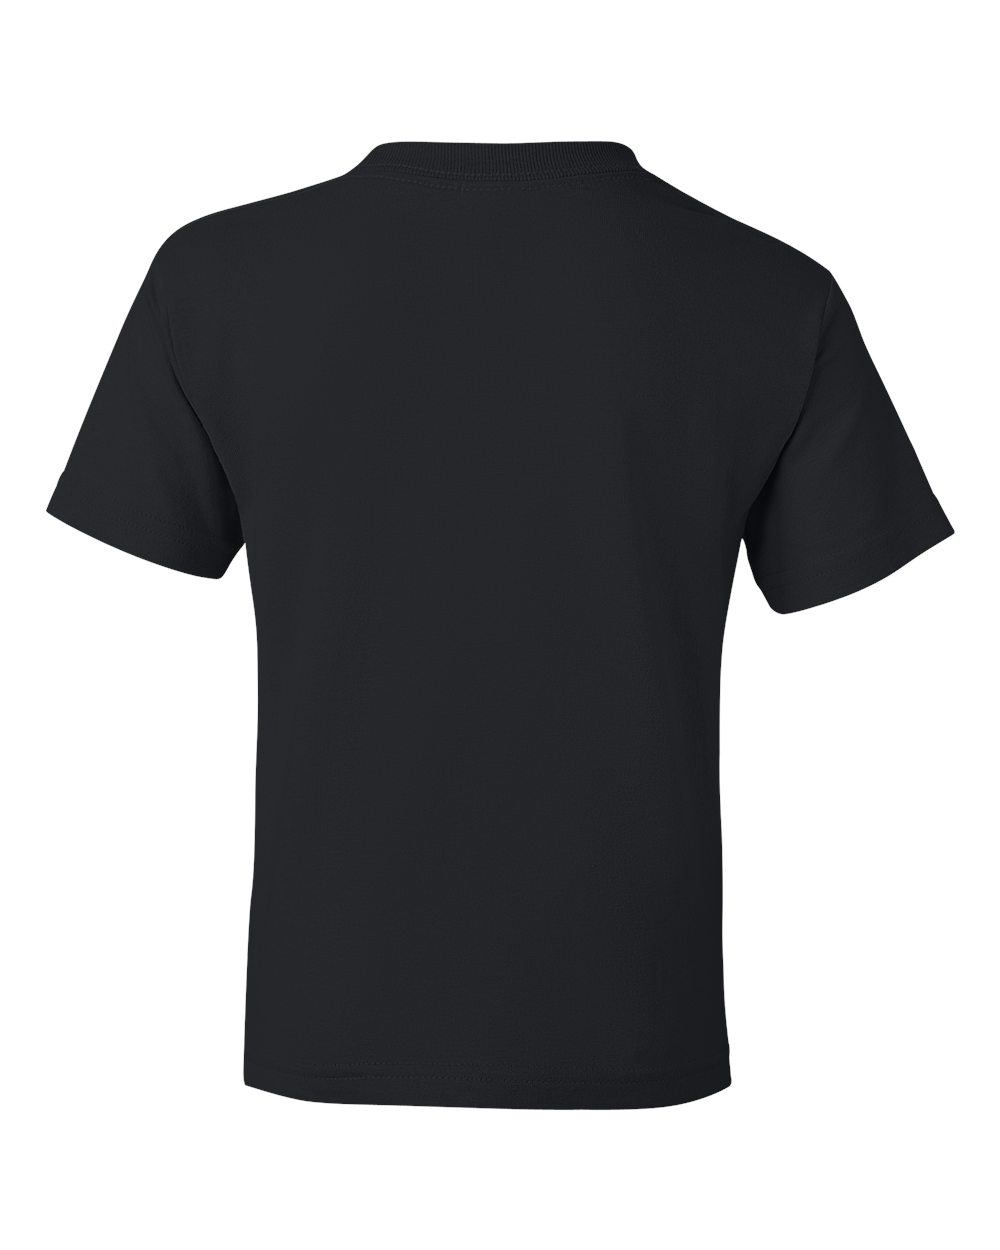 Youth Coaching Team 50-50 Blend Black Unisex Short Sleeve Shirt.